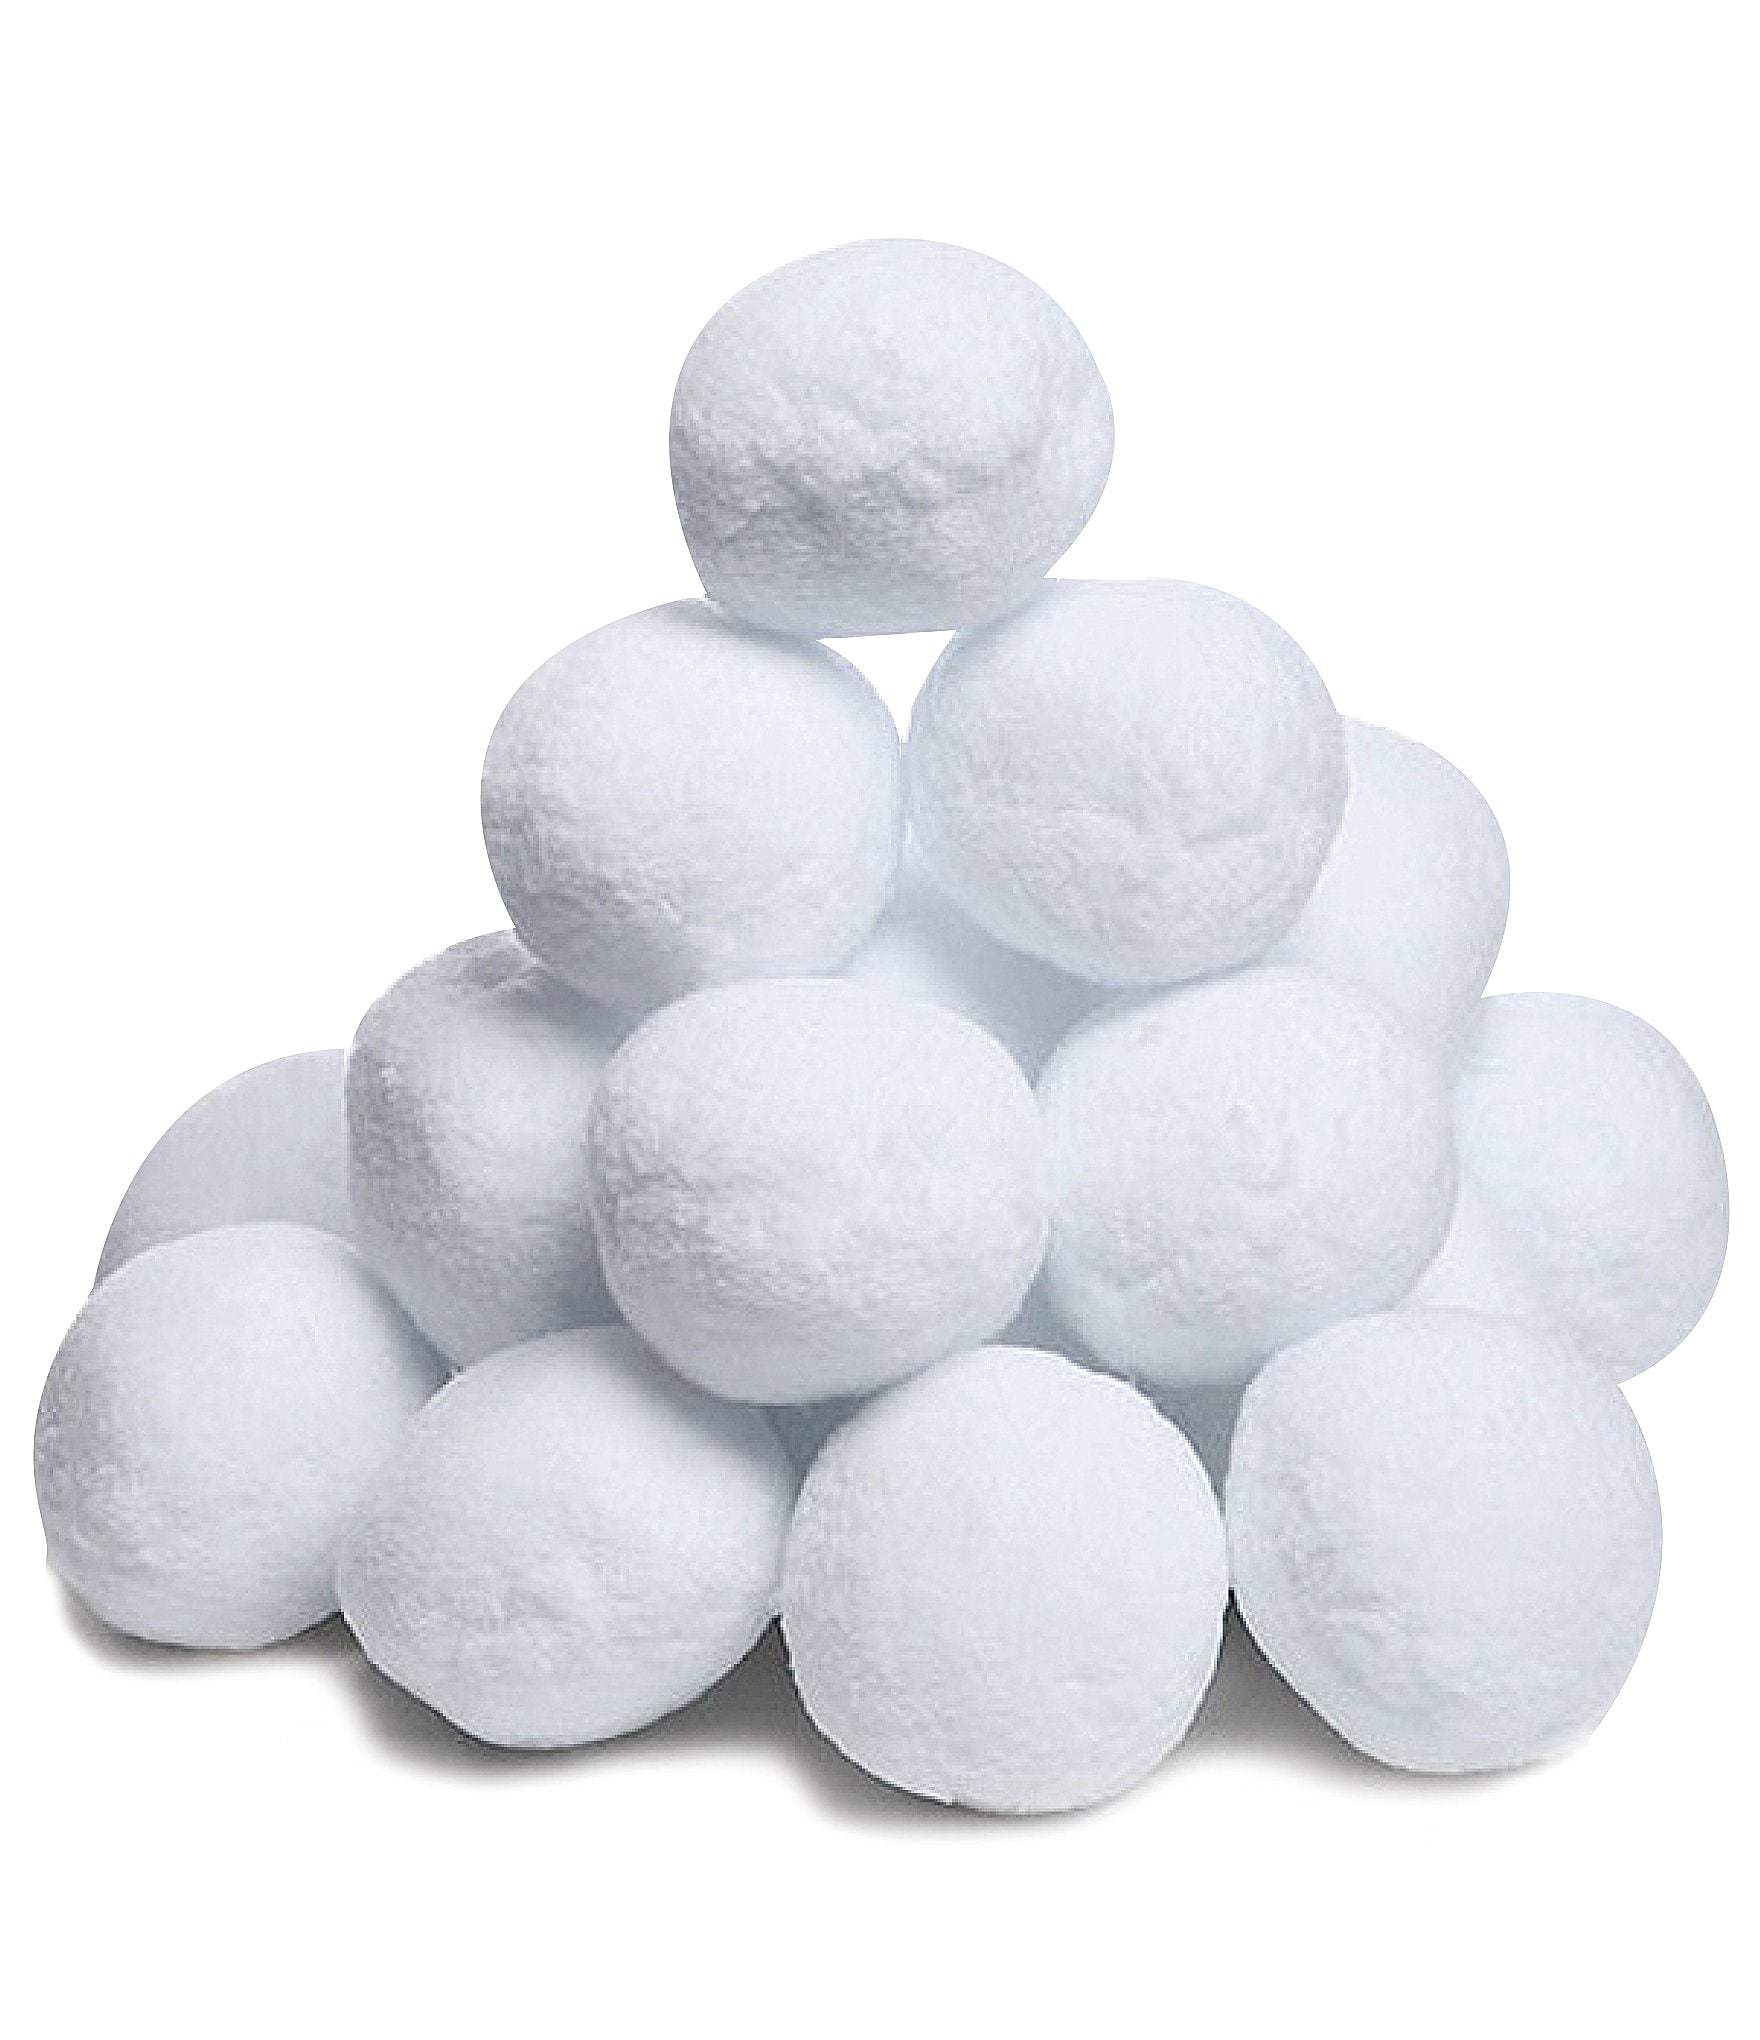 indoor snowballs marshalls｜TikTok Search